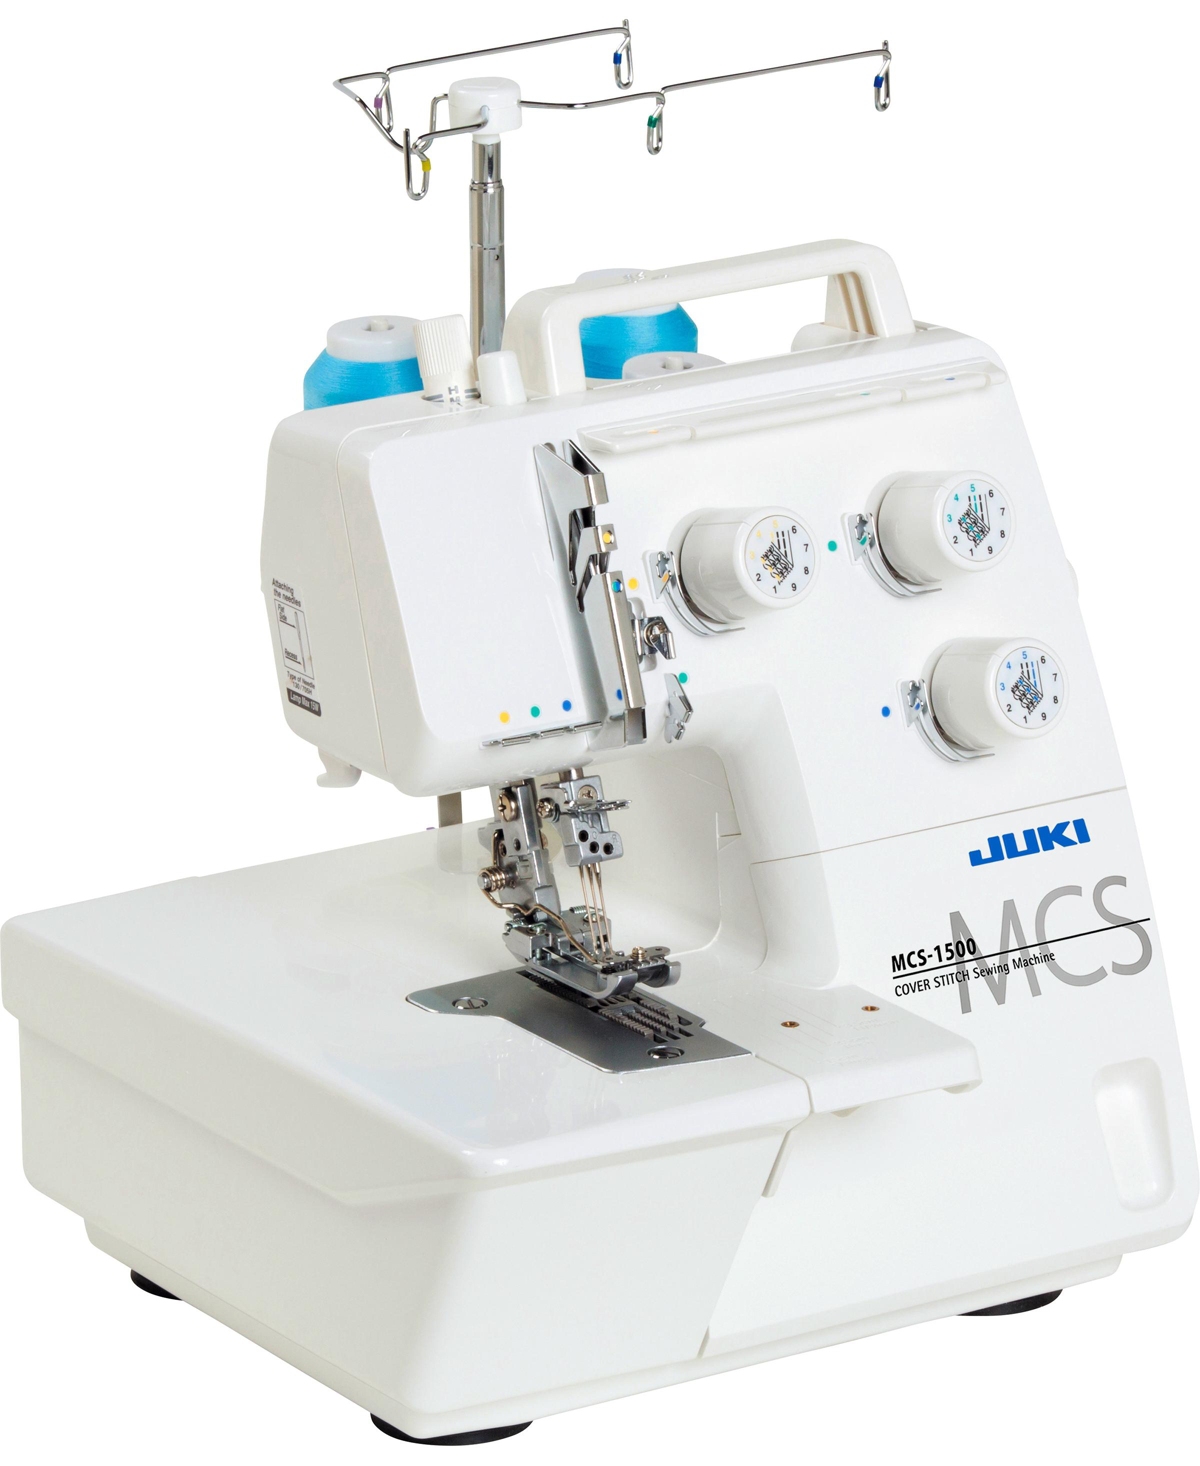 Mcs-1500 Cover Stitch and Chain Stitch Sewing Machine - White